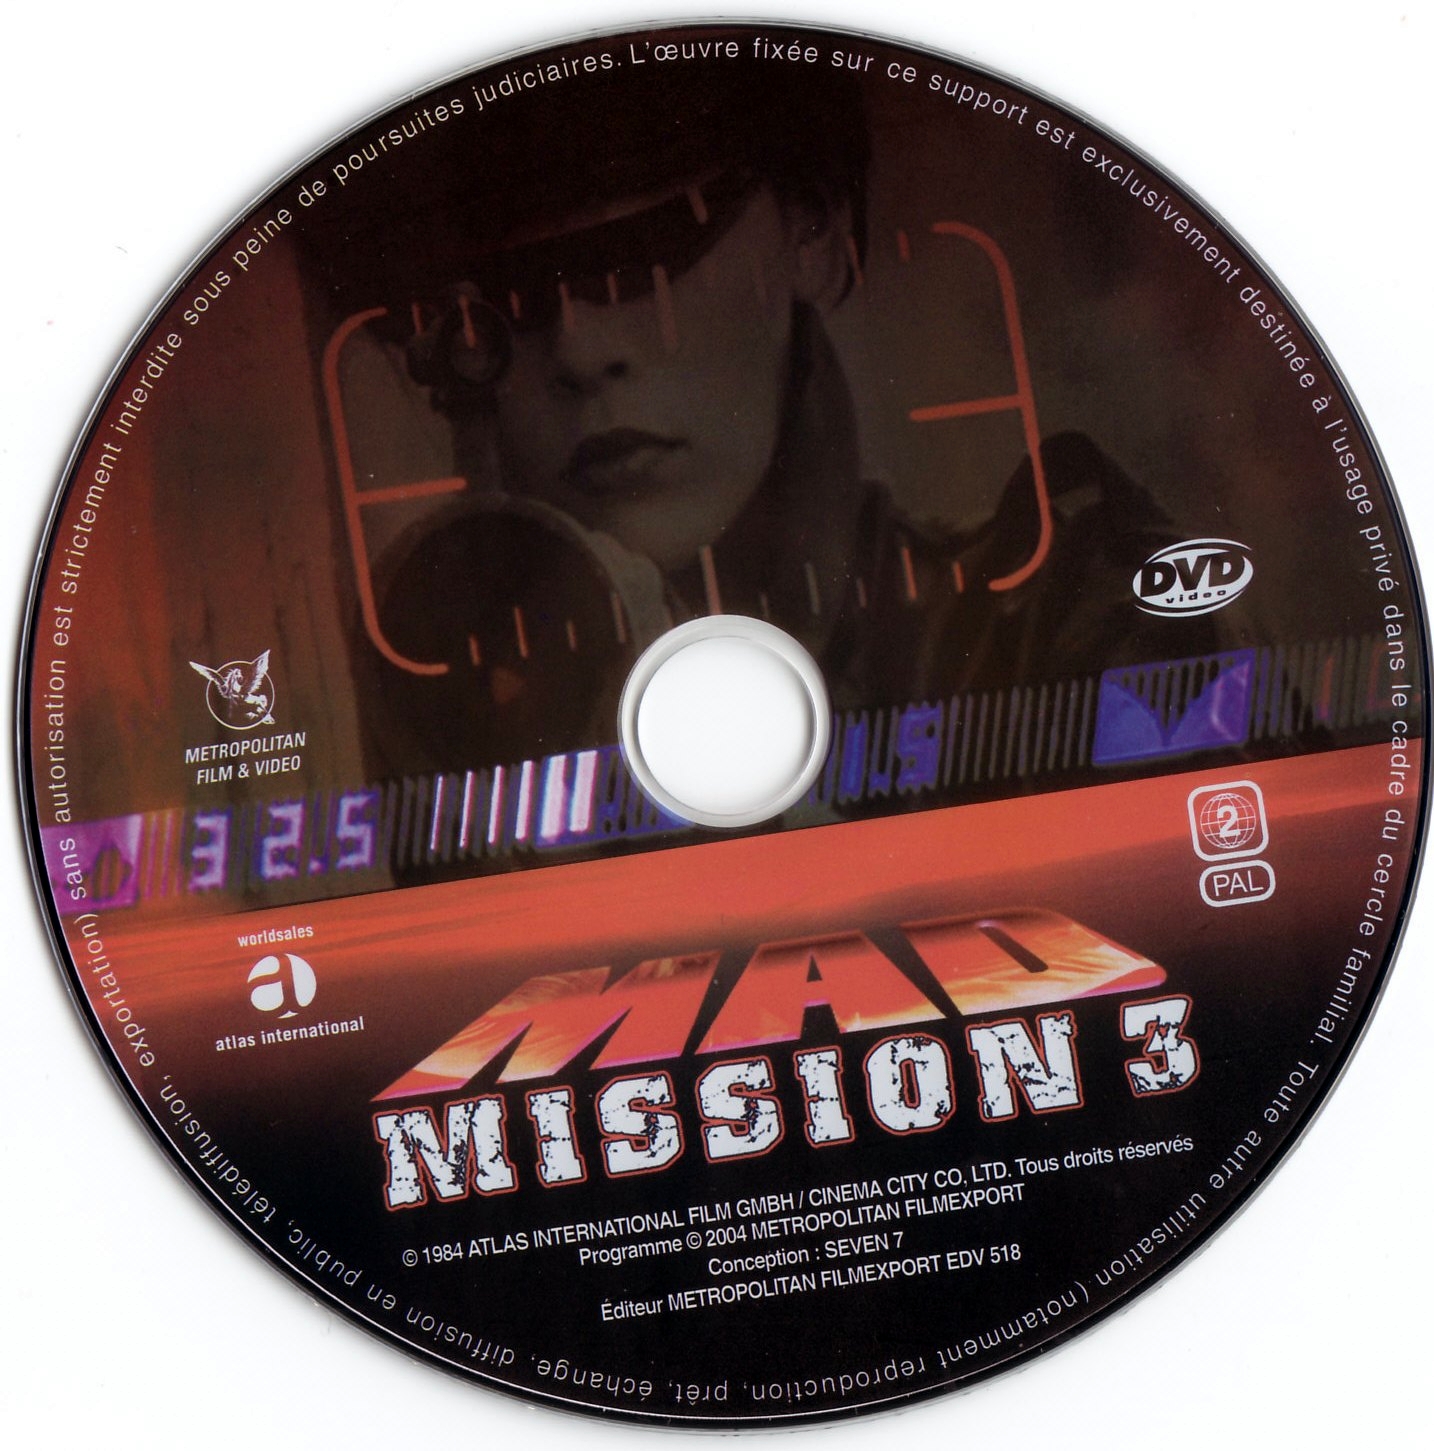 Mad mission 3